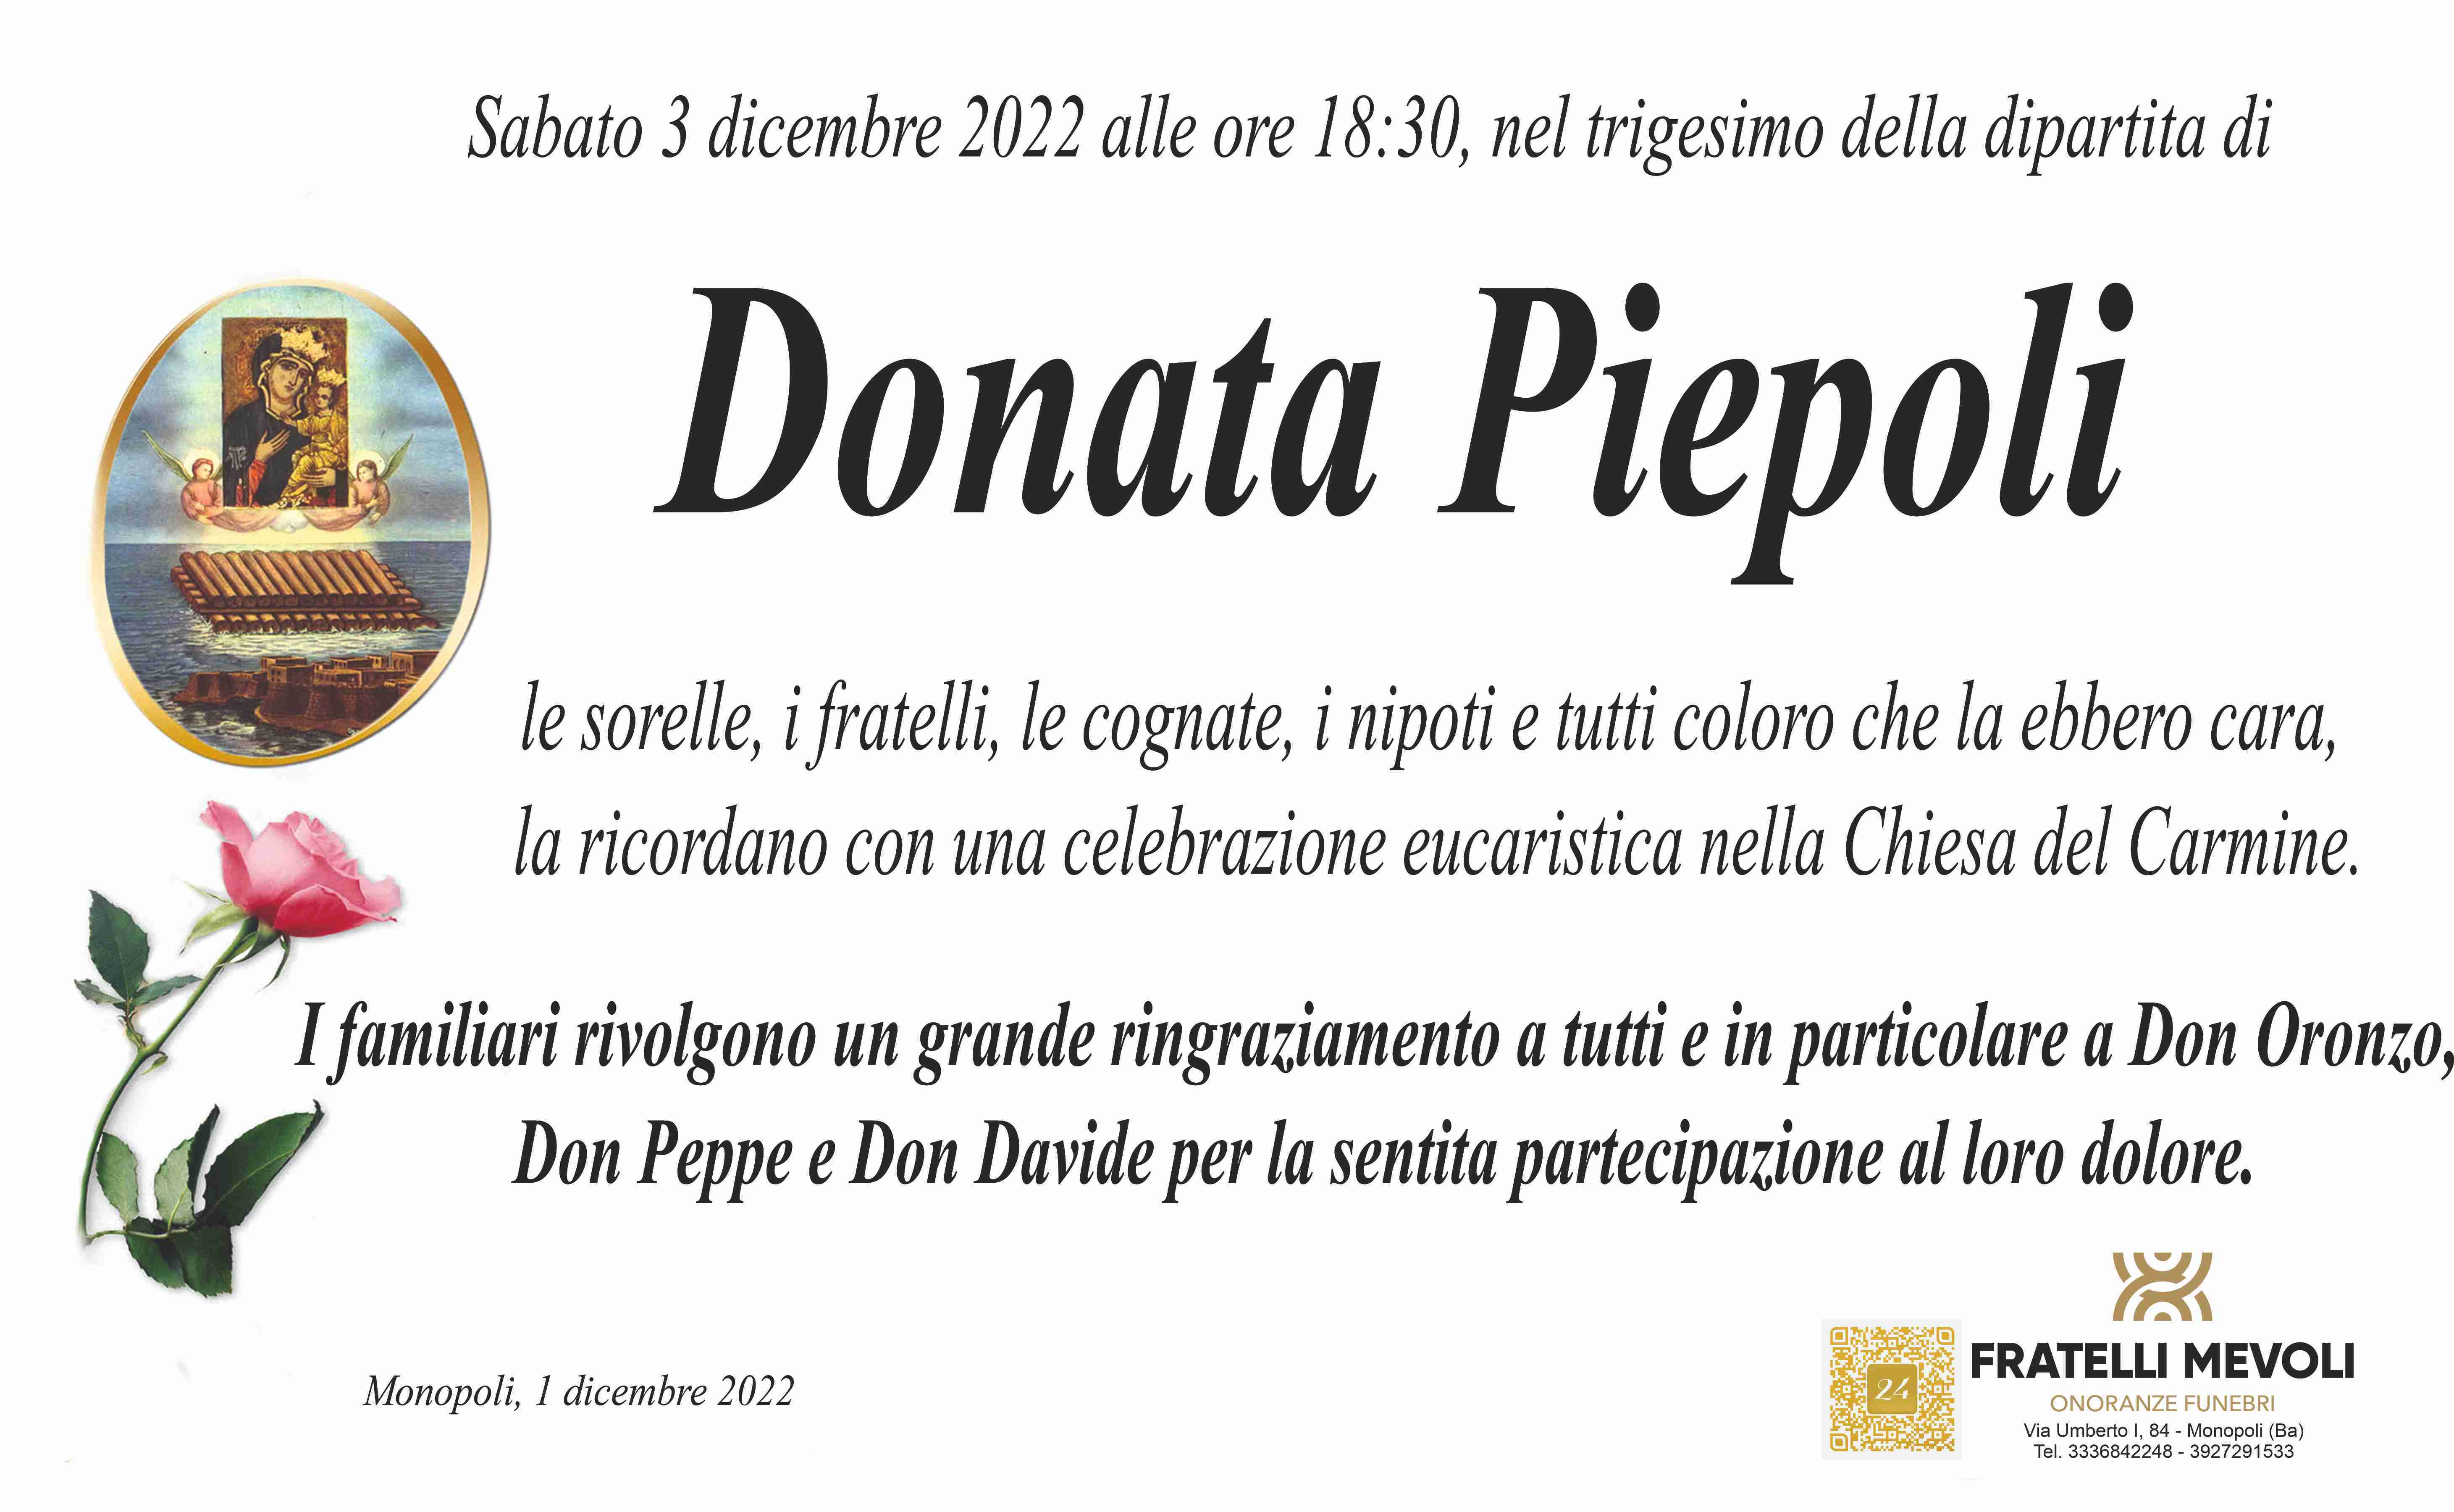 Donata Piepoli